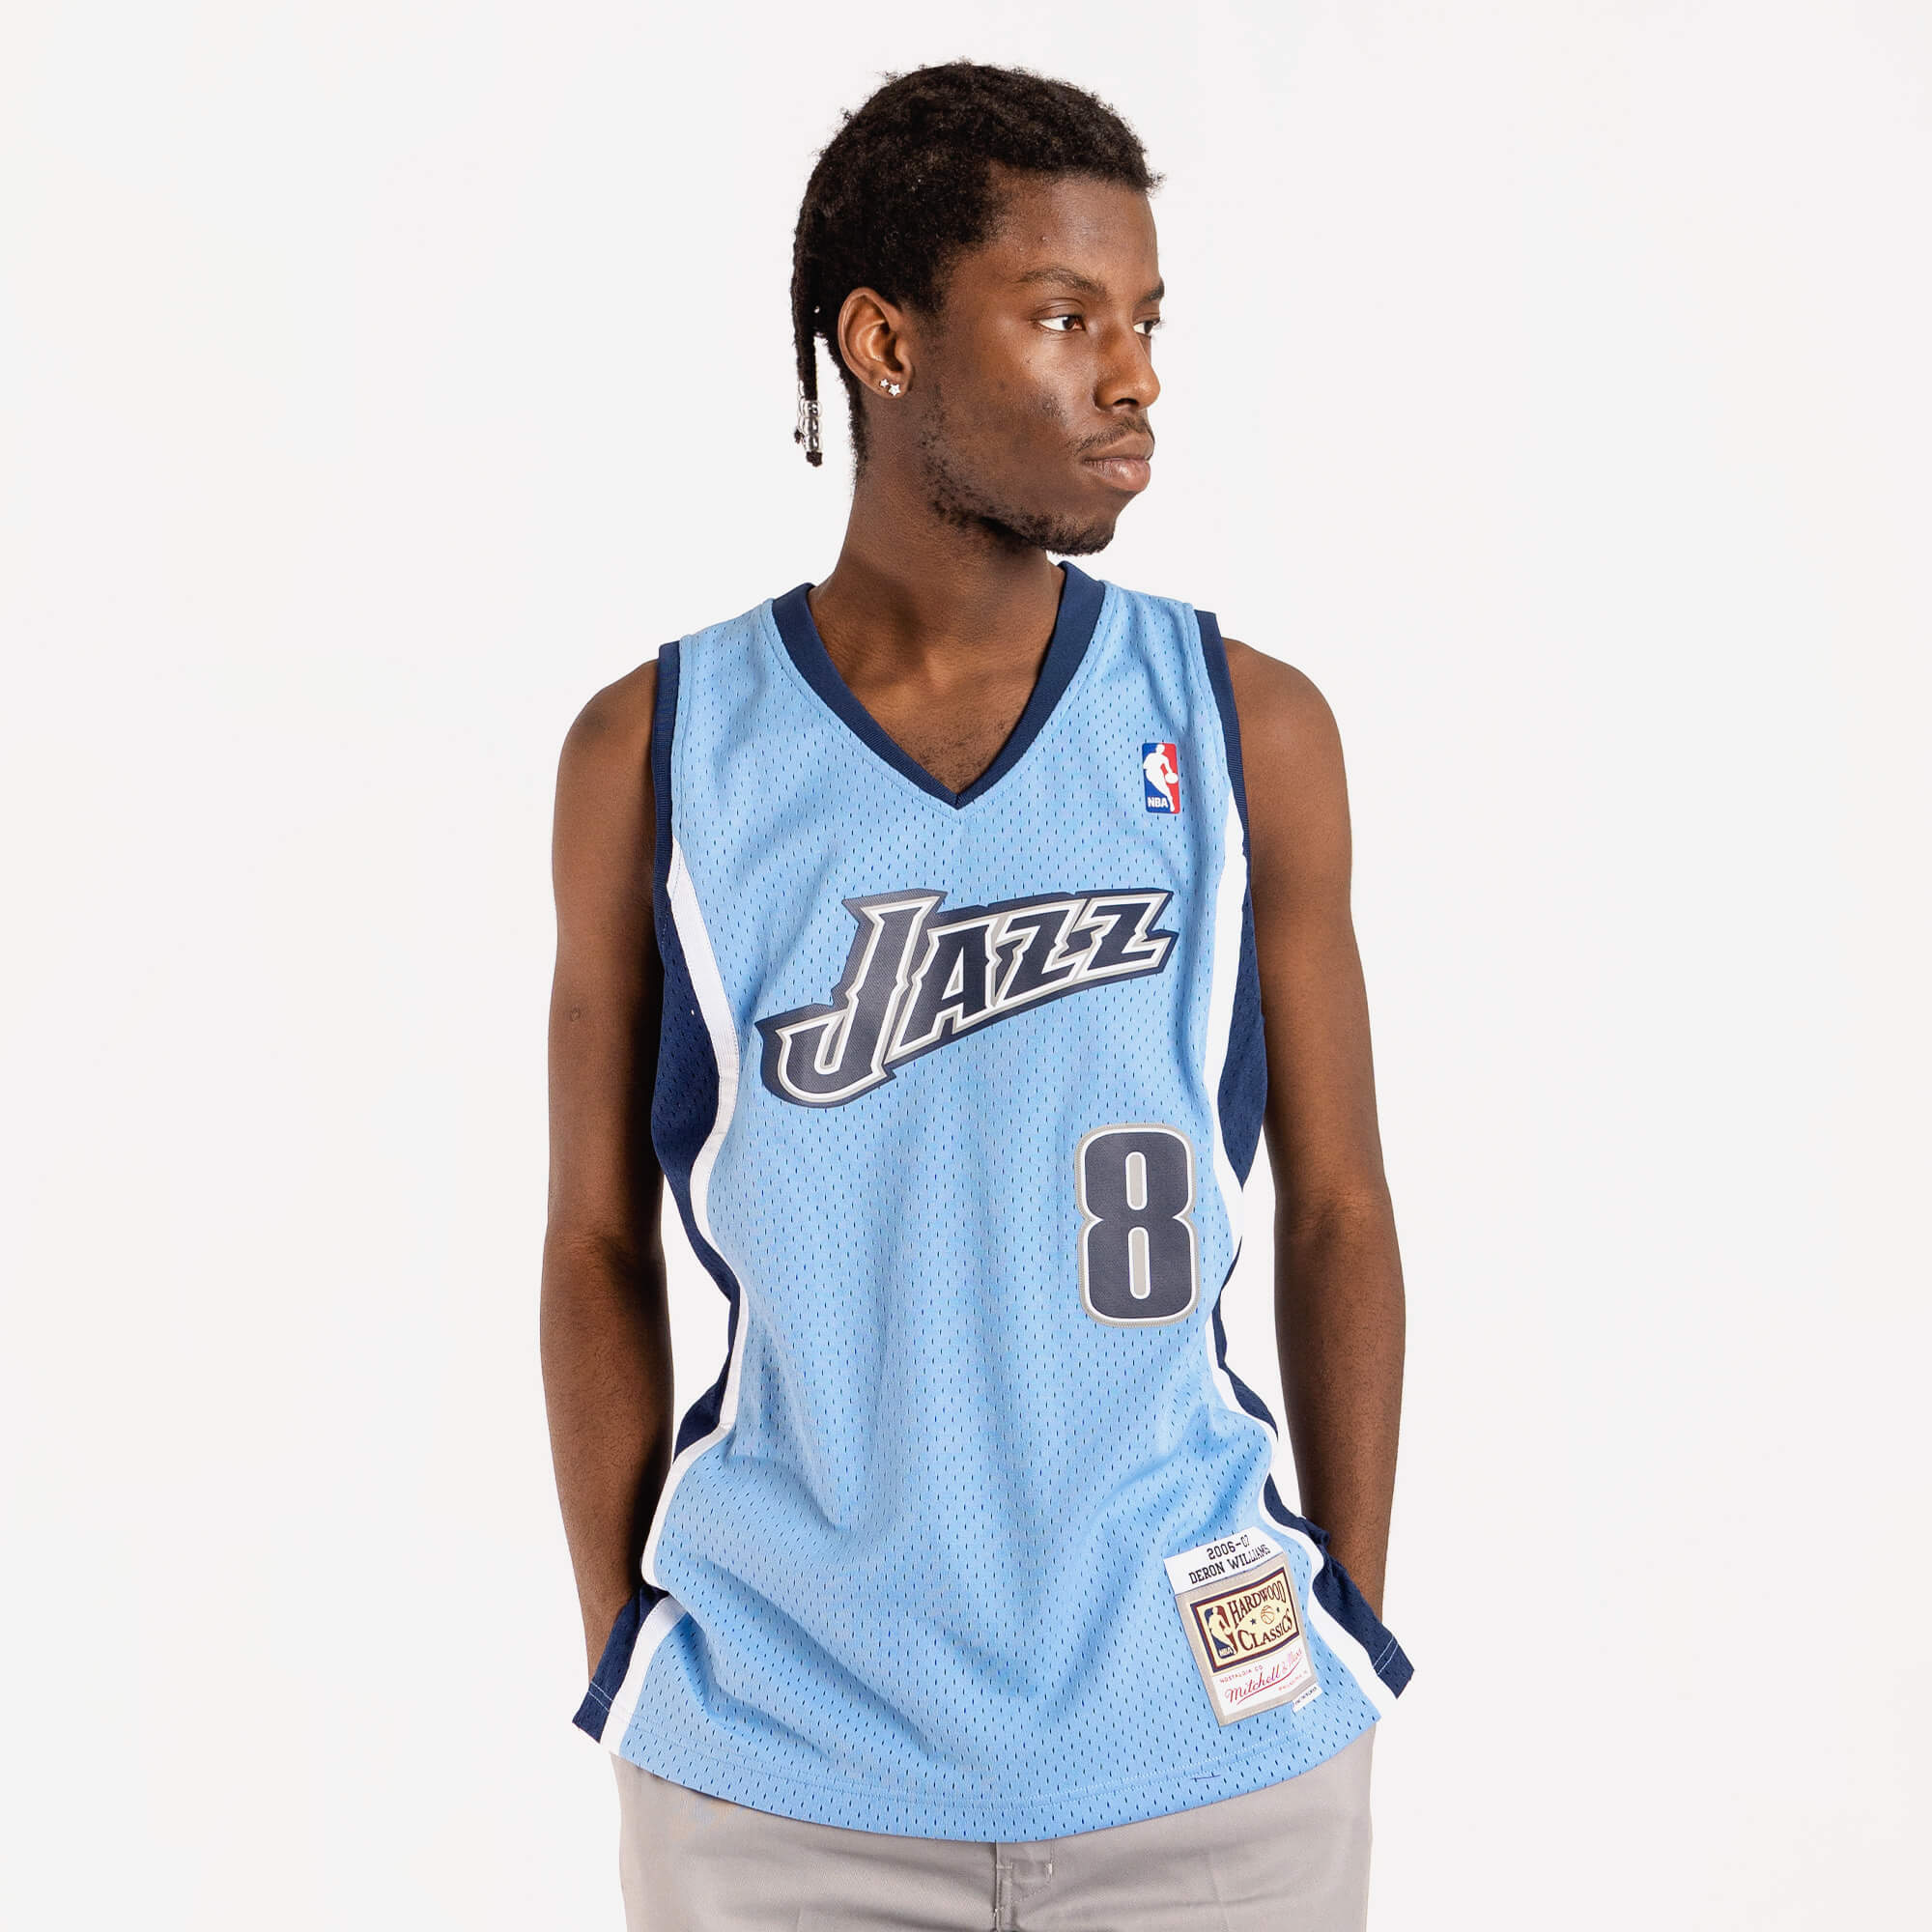 Deron Williams Utah Jazz NBA Jerseys for sale